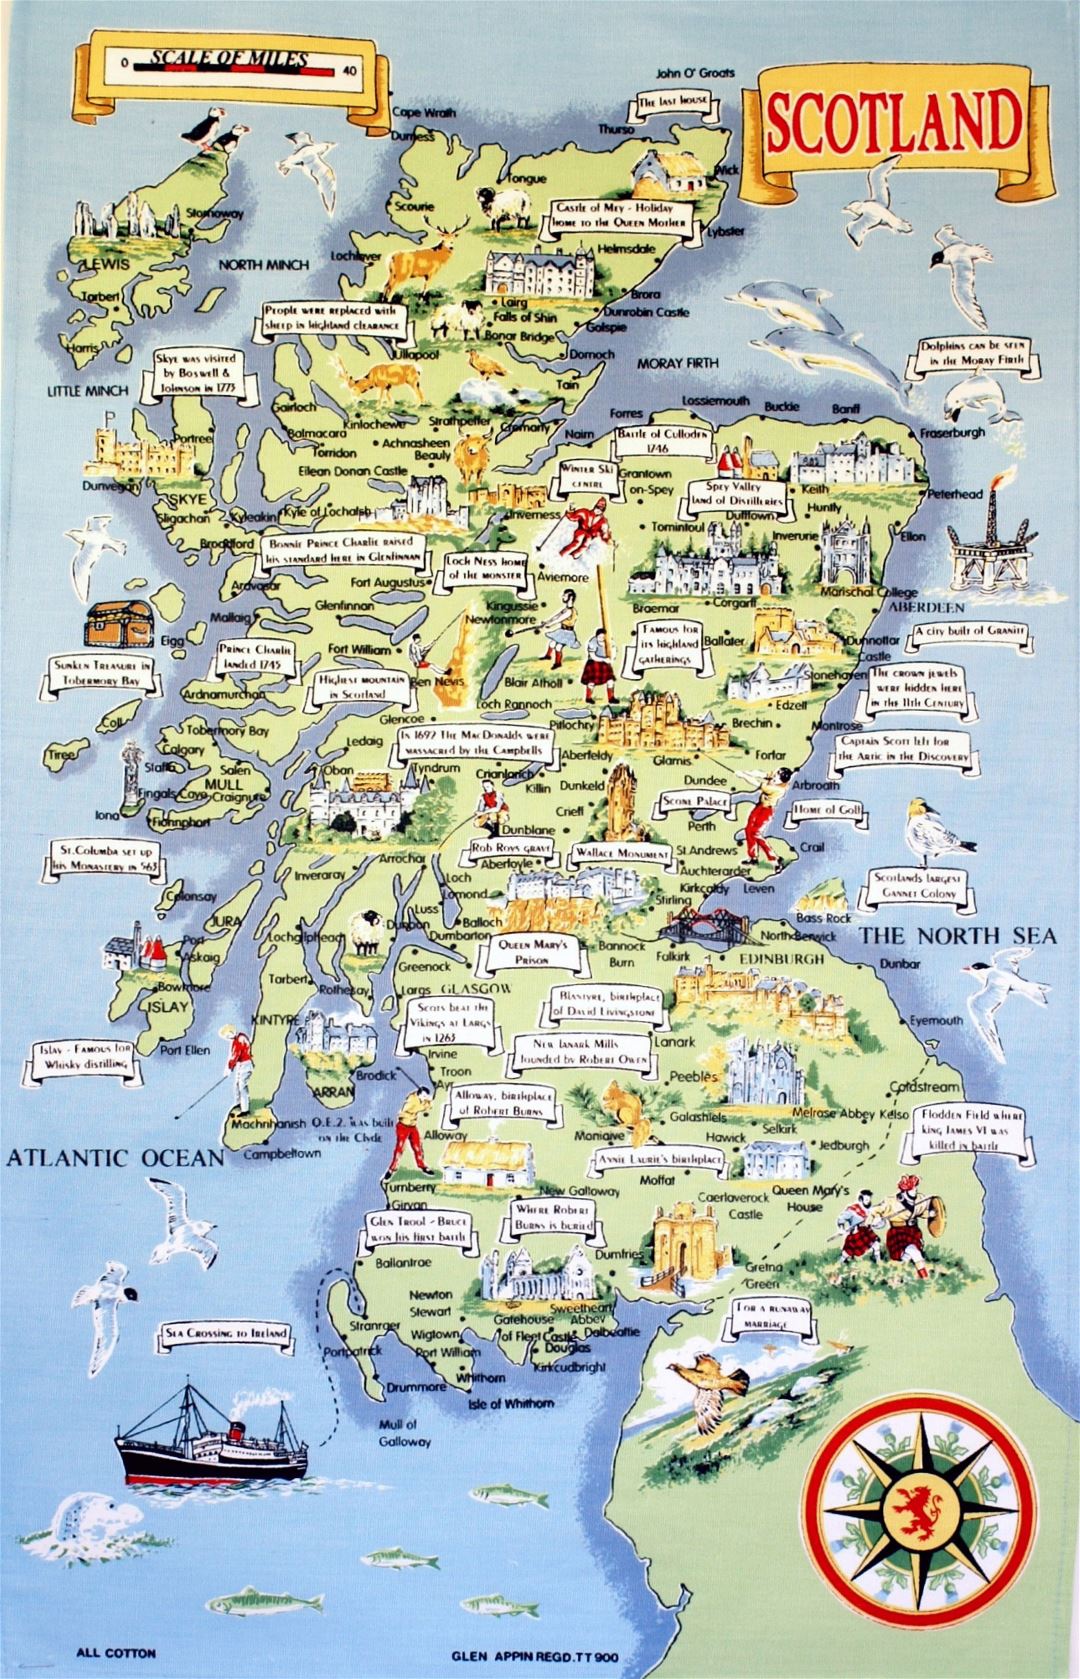 Grande mapa turístico ilustrado de Escocia